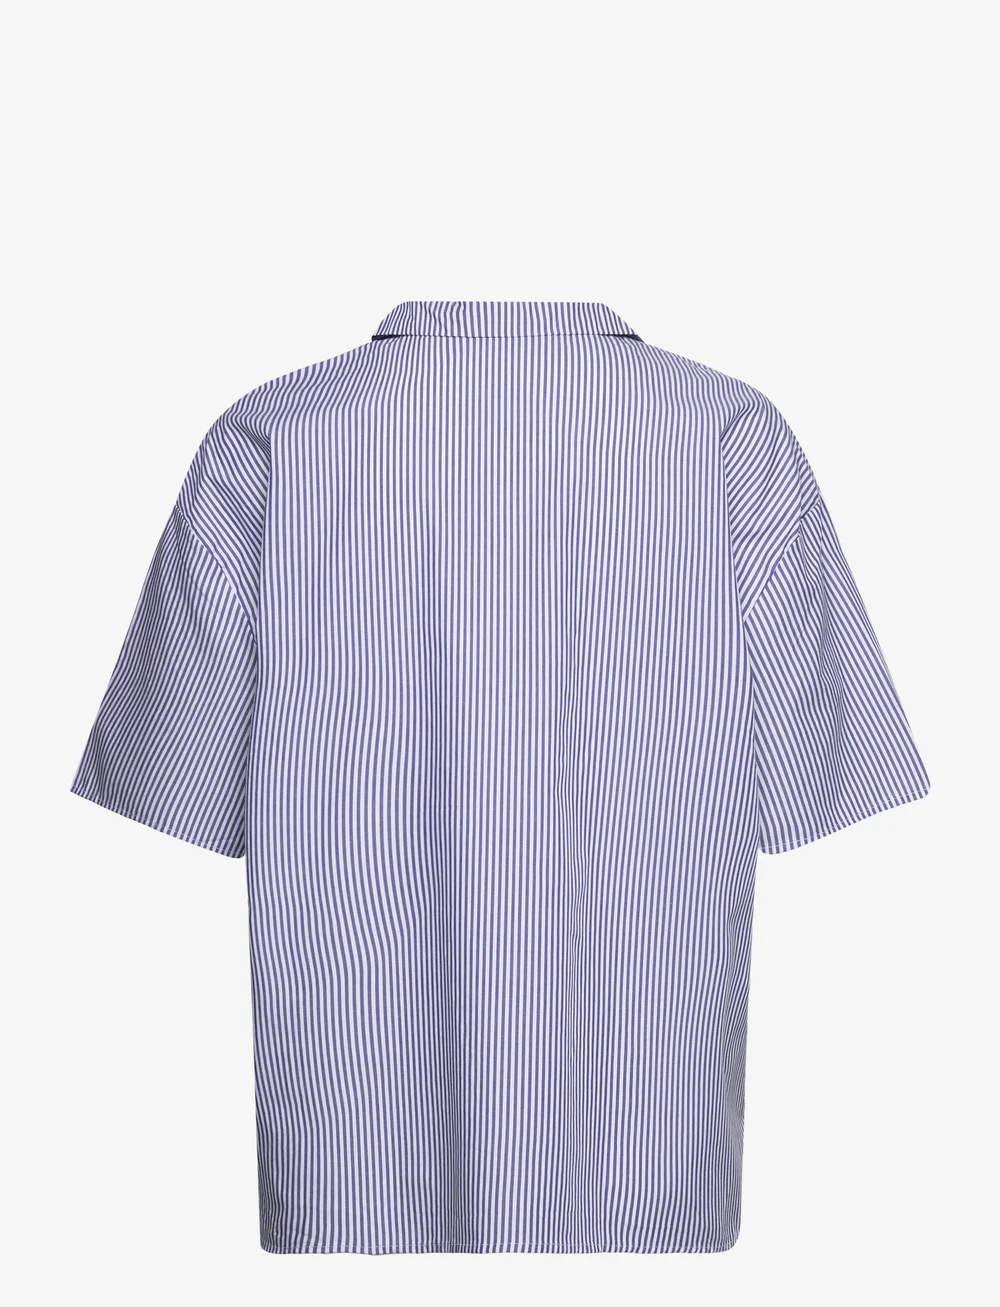 Mango Short Sleeve Striped Shirt skjorter Boozt.com